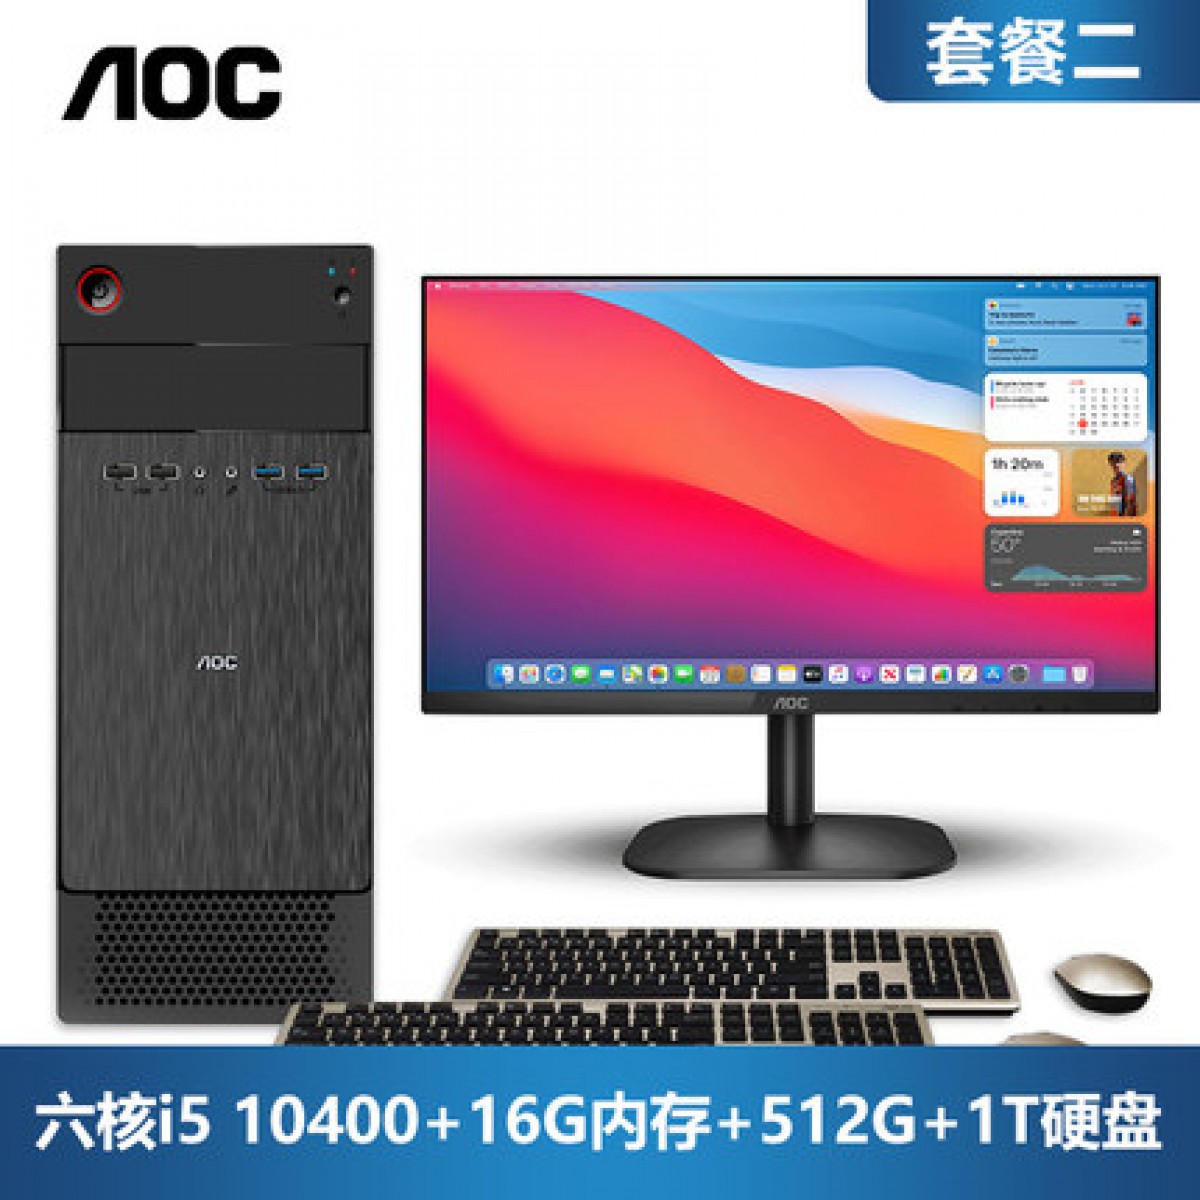 AOC A815H4012390台式计算机 I5-10400 16G 512G+1T硬盘 21.5寸显示器